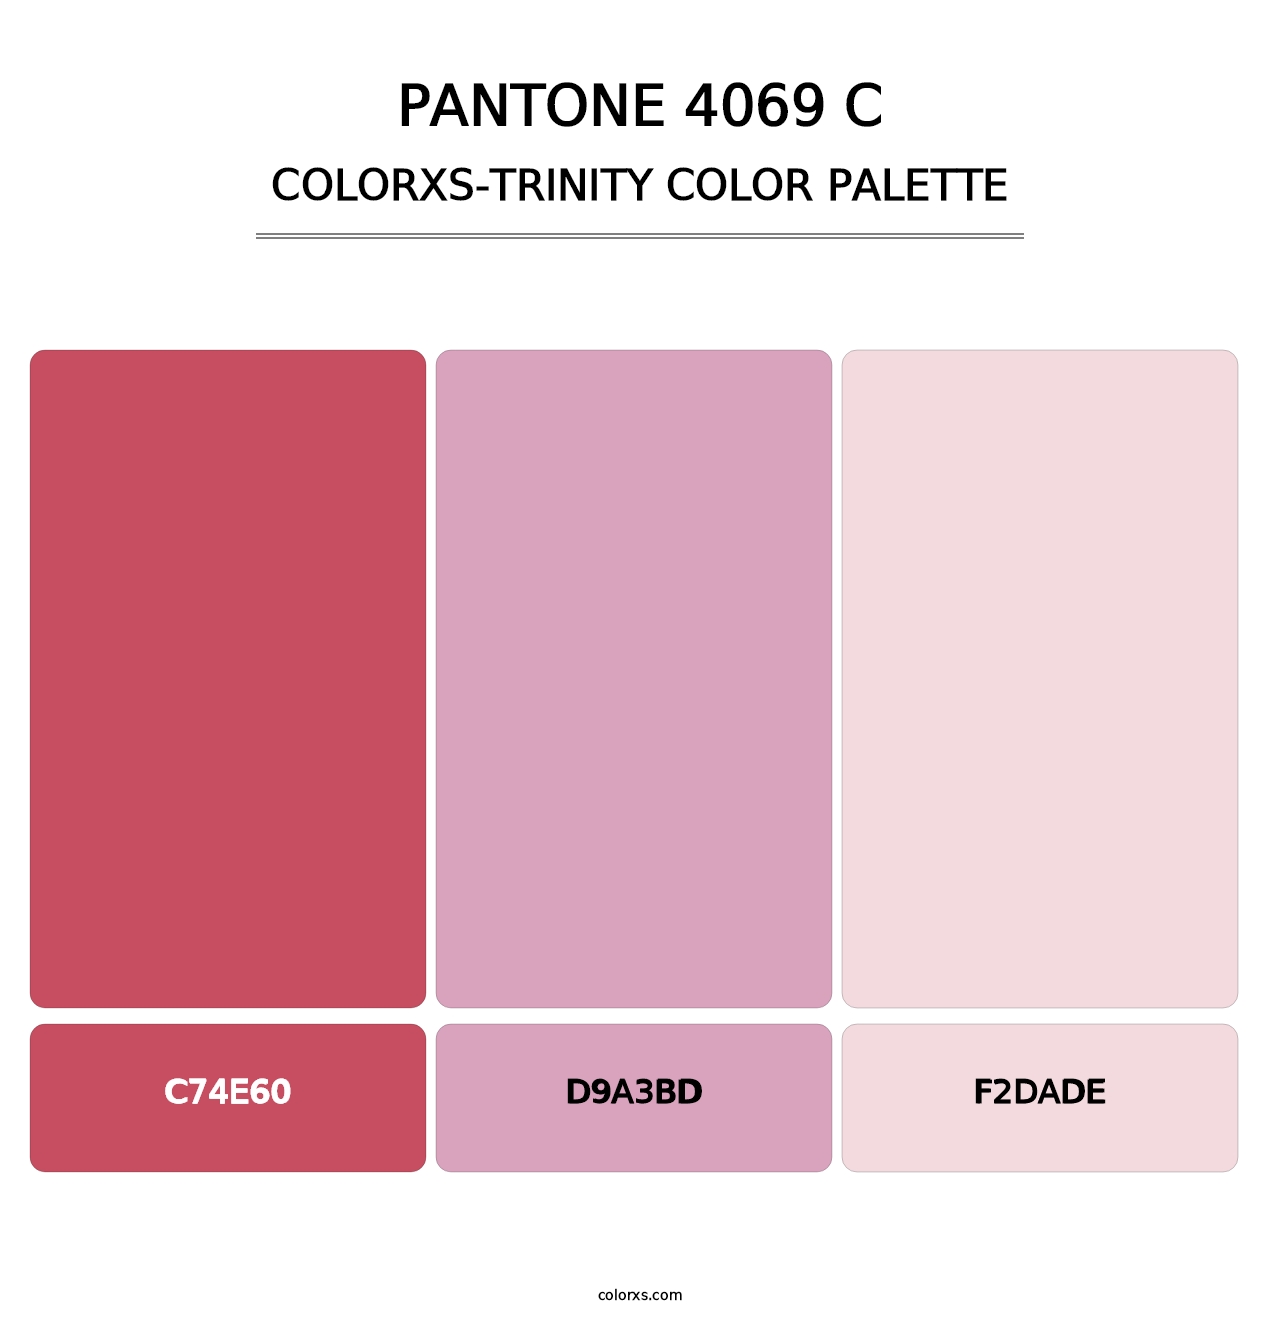 PANTONE 4069 C - Colorxs Trinity Palette